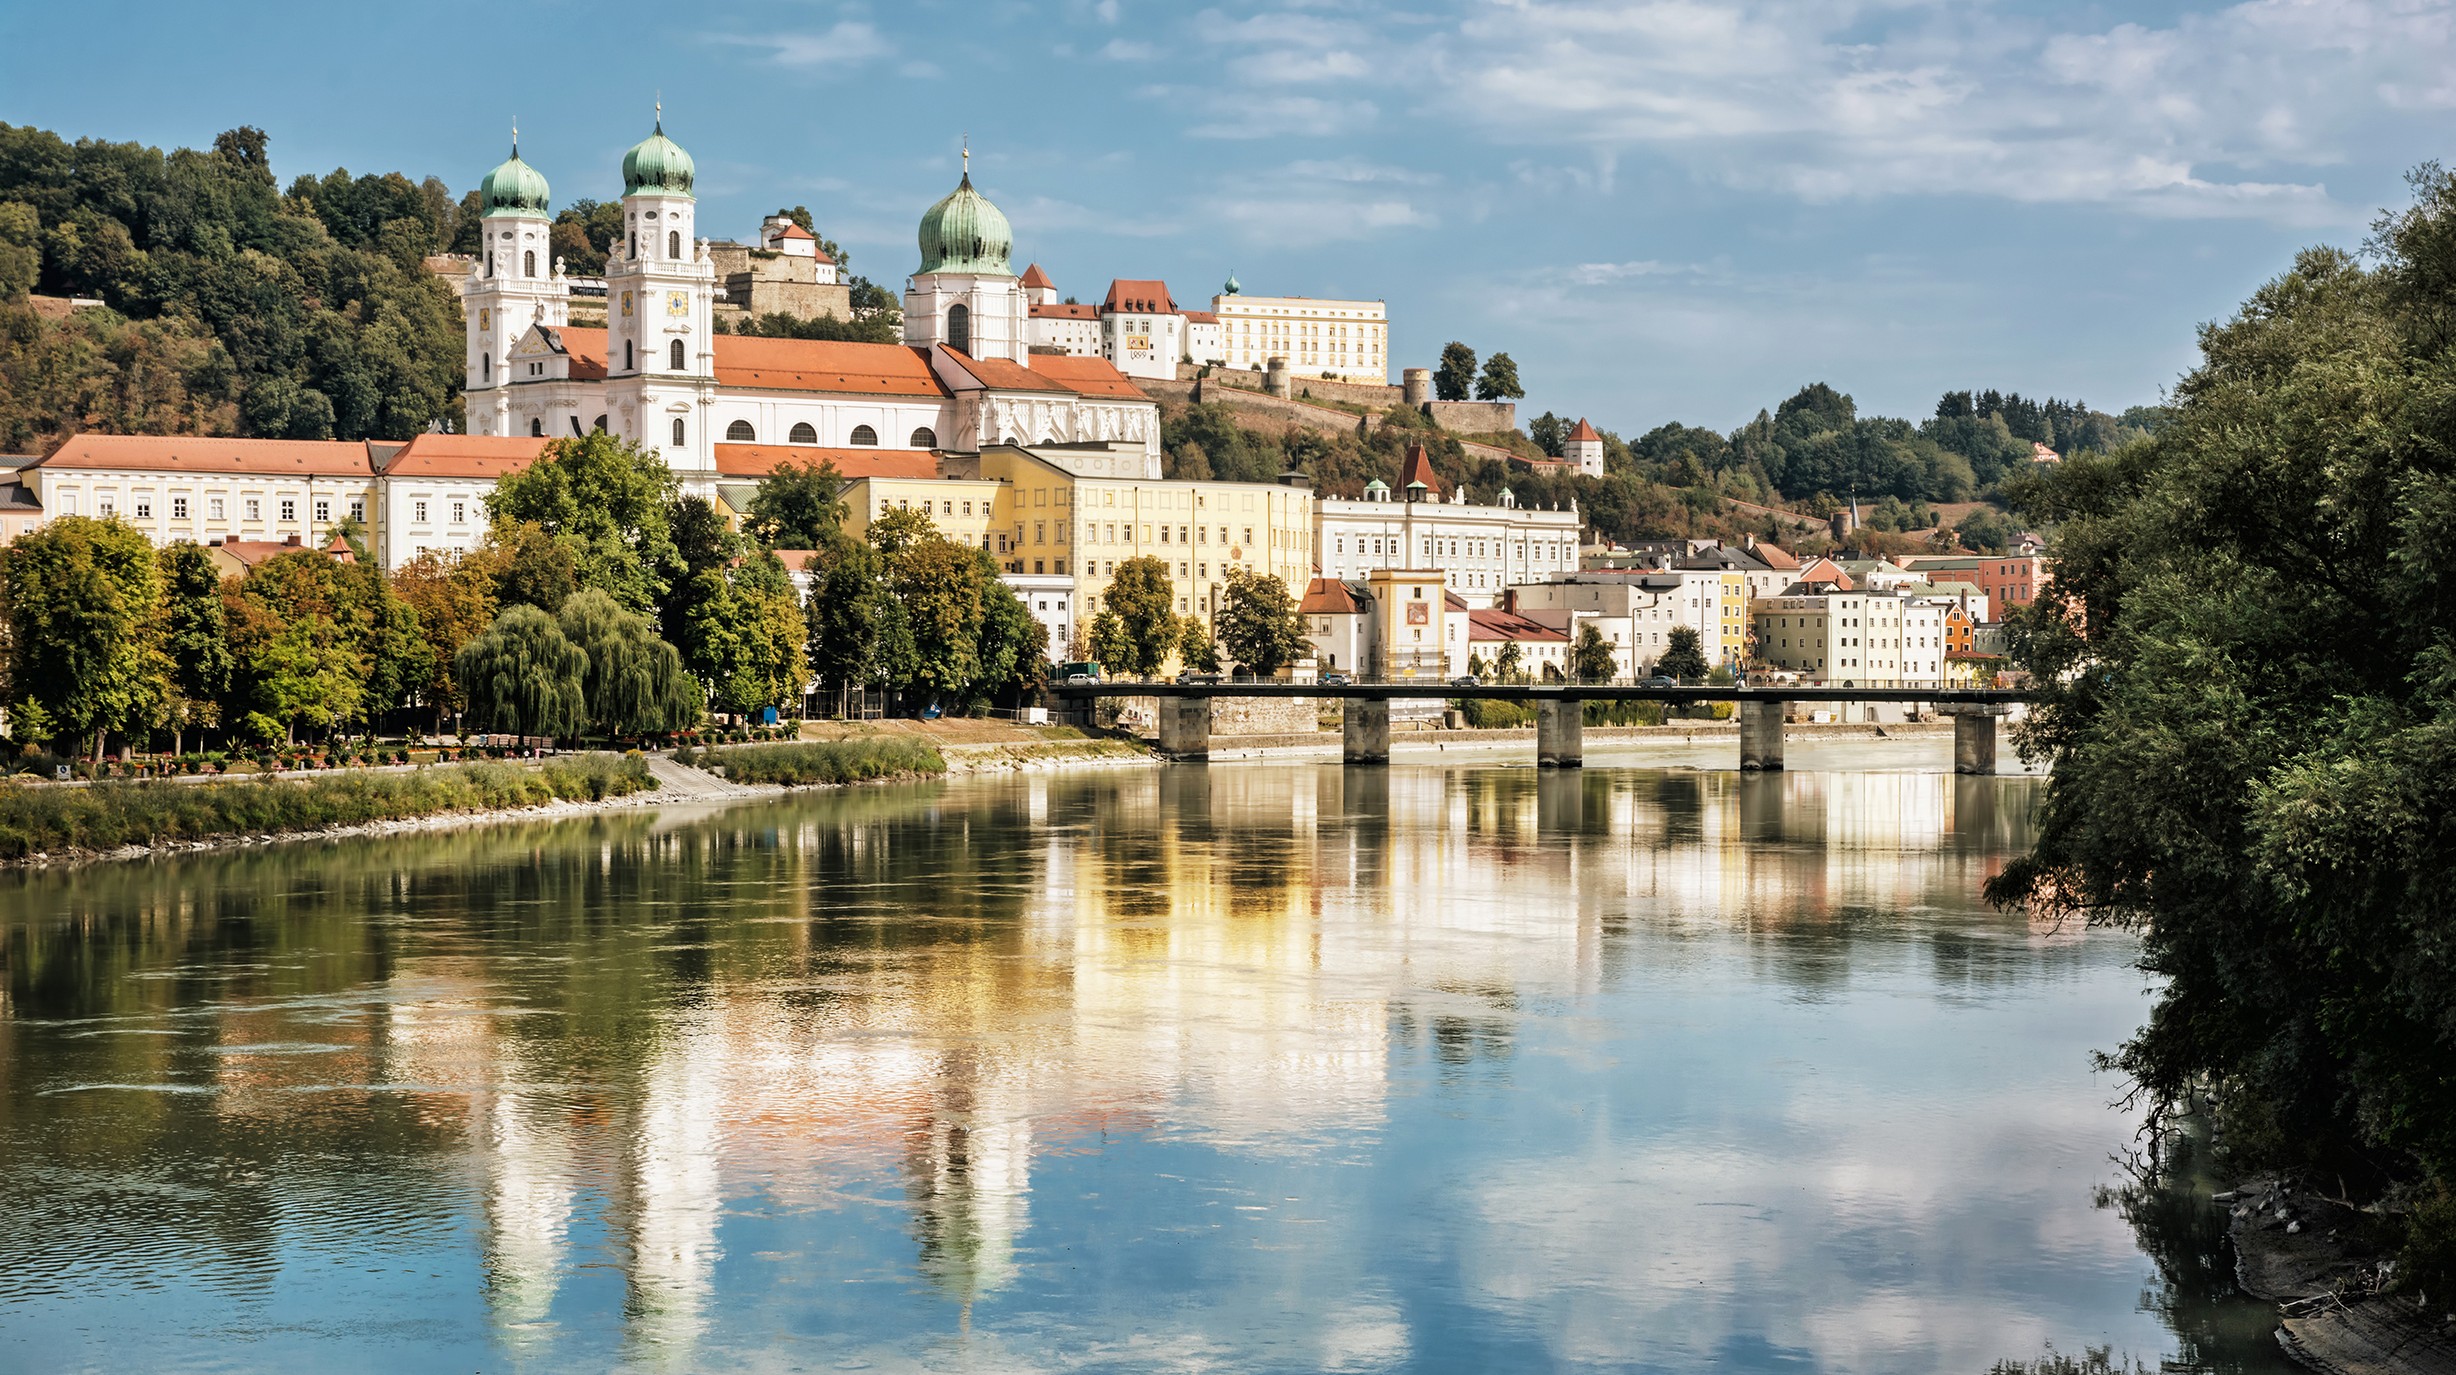 https://fs.hubspotusercontent00.net/hubfs/9318009/Vaargebieden%20-%20Donau/Passau.jpg